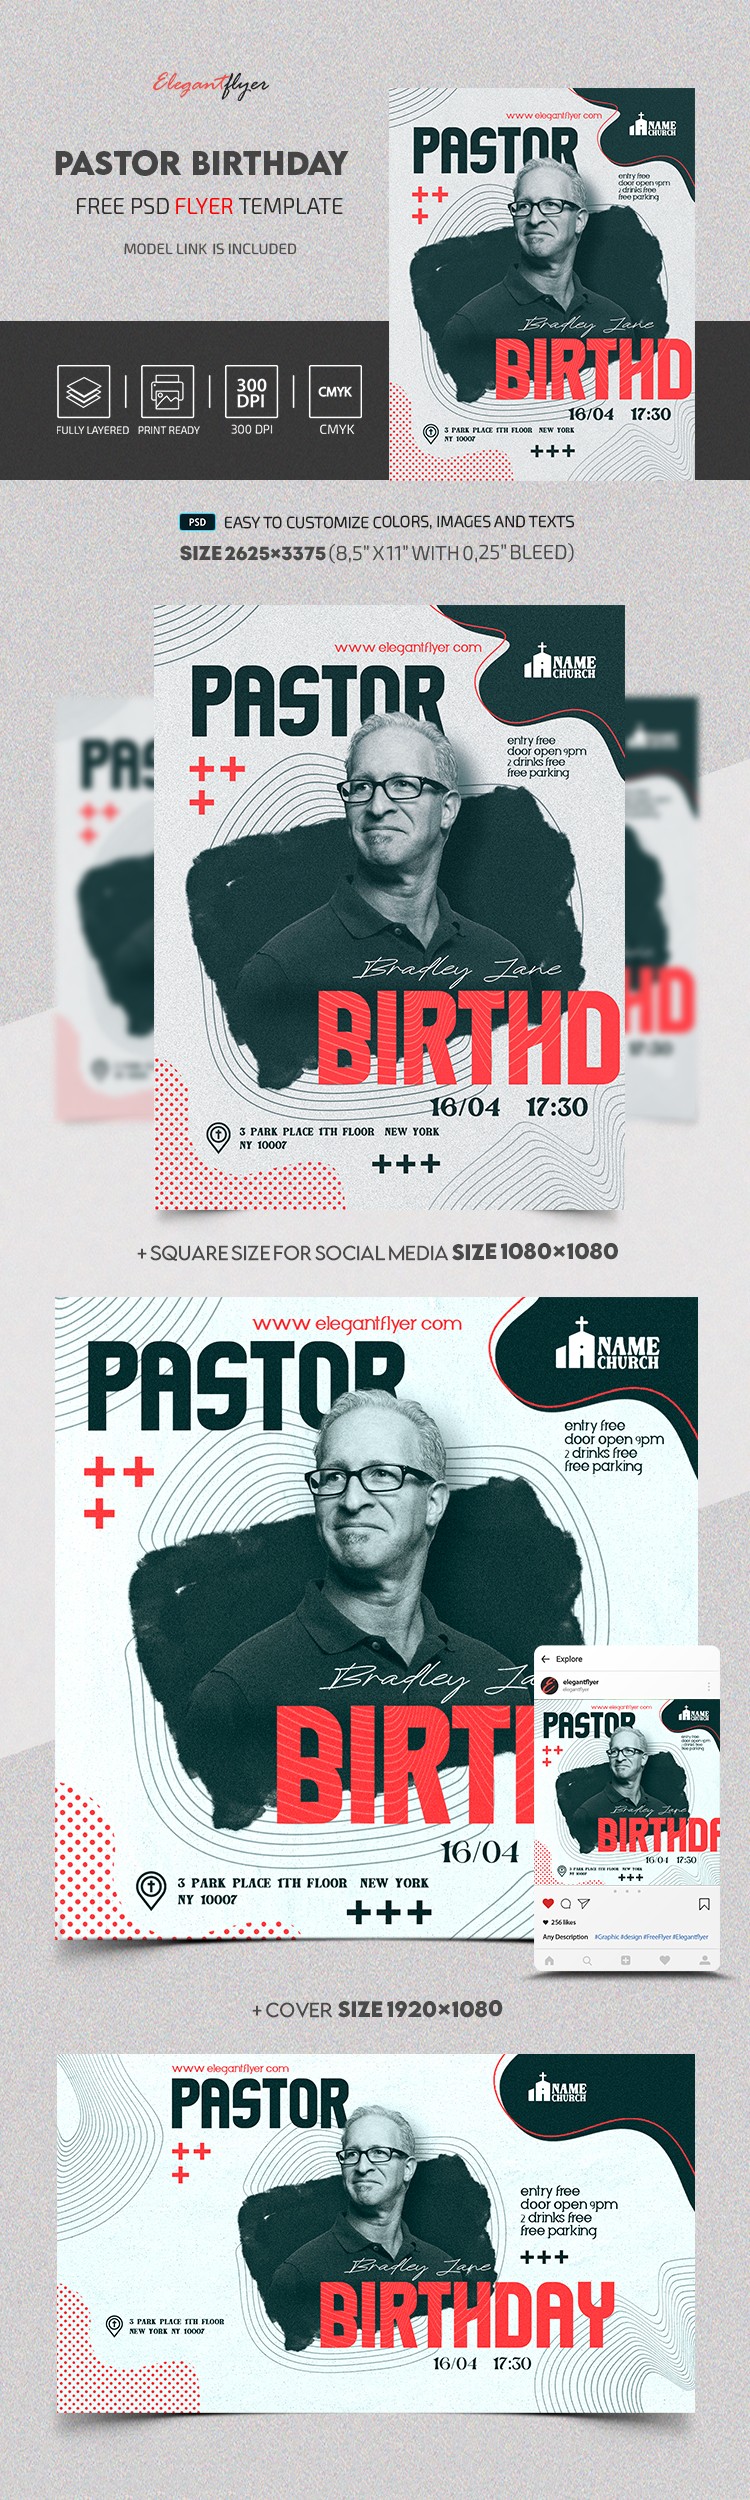 Urodziny pastora by ElegantFlyer